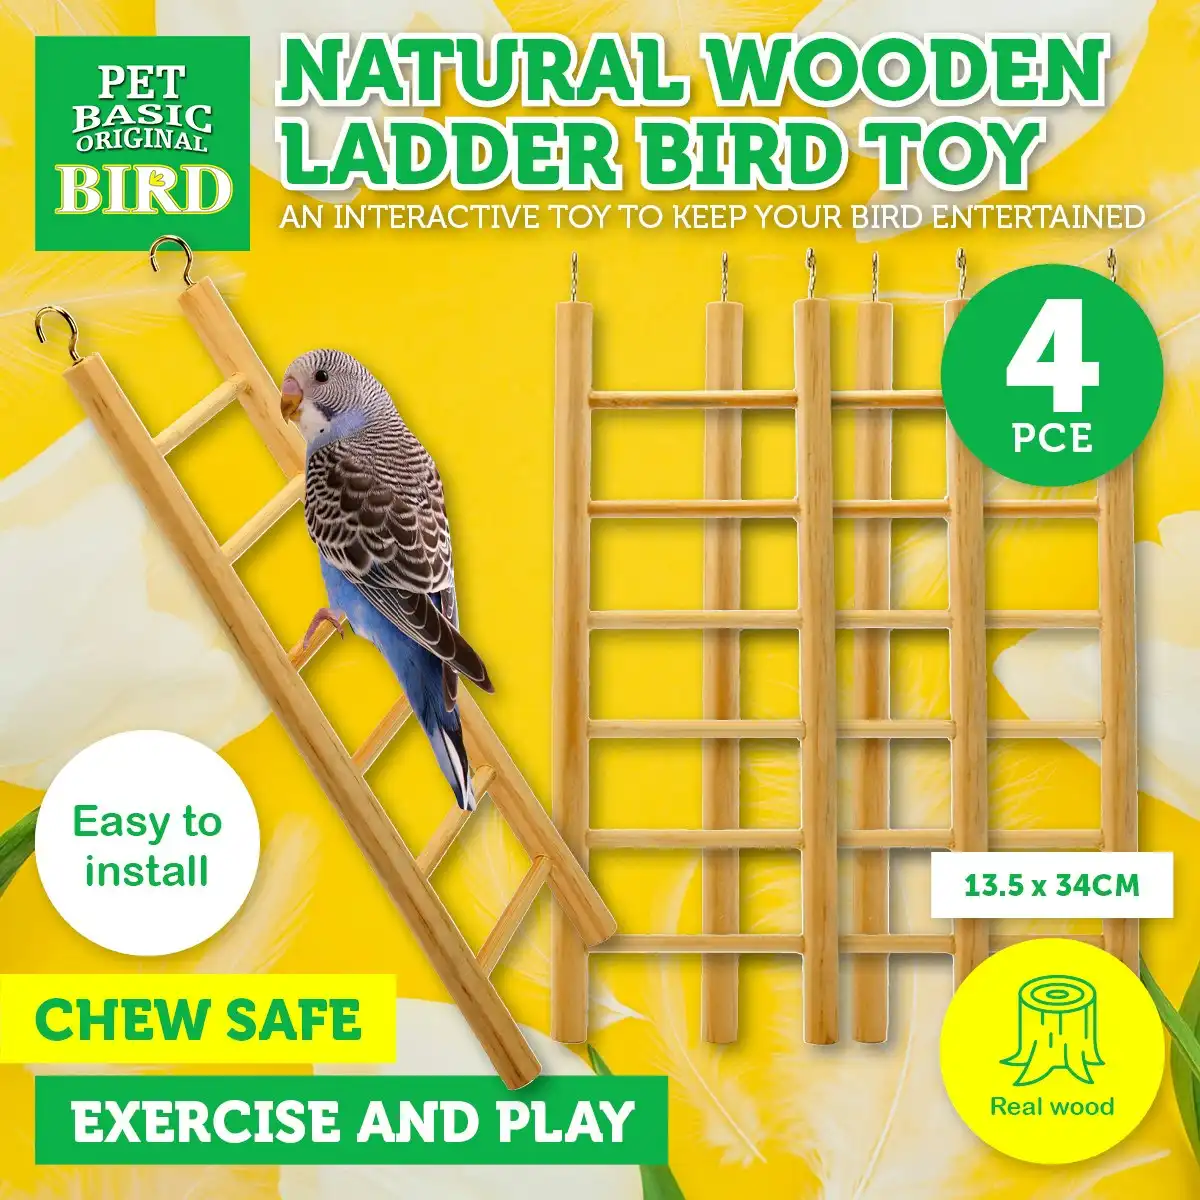 Pet Basic 4PCE Wooden Ladder Bird Toy Natural Wood Stimulating 13.5 x 34cm